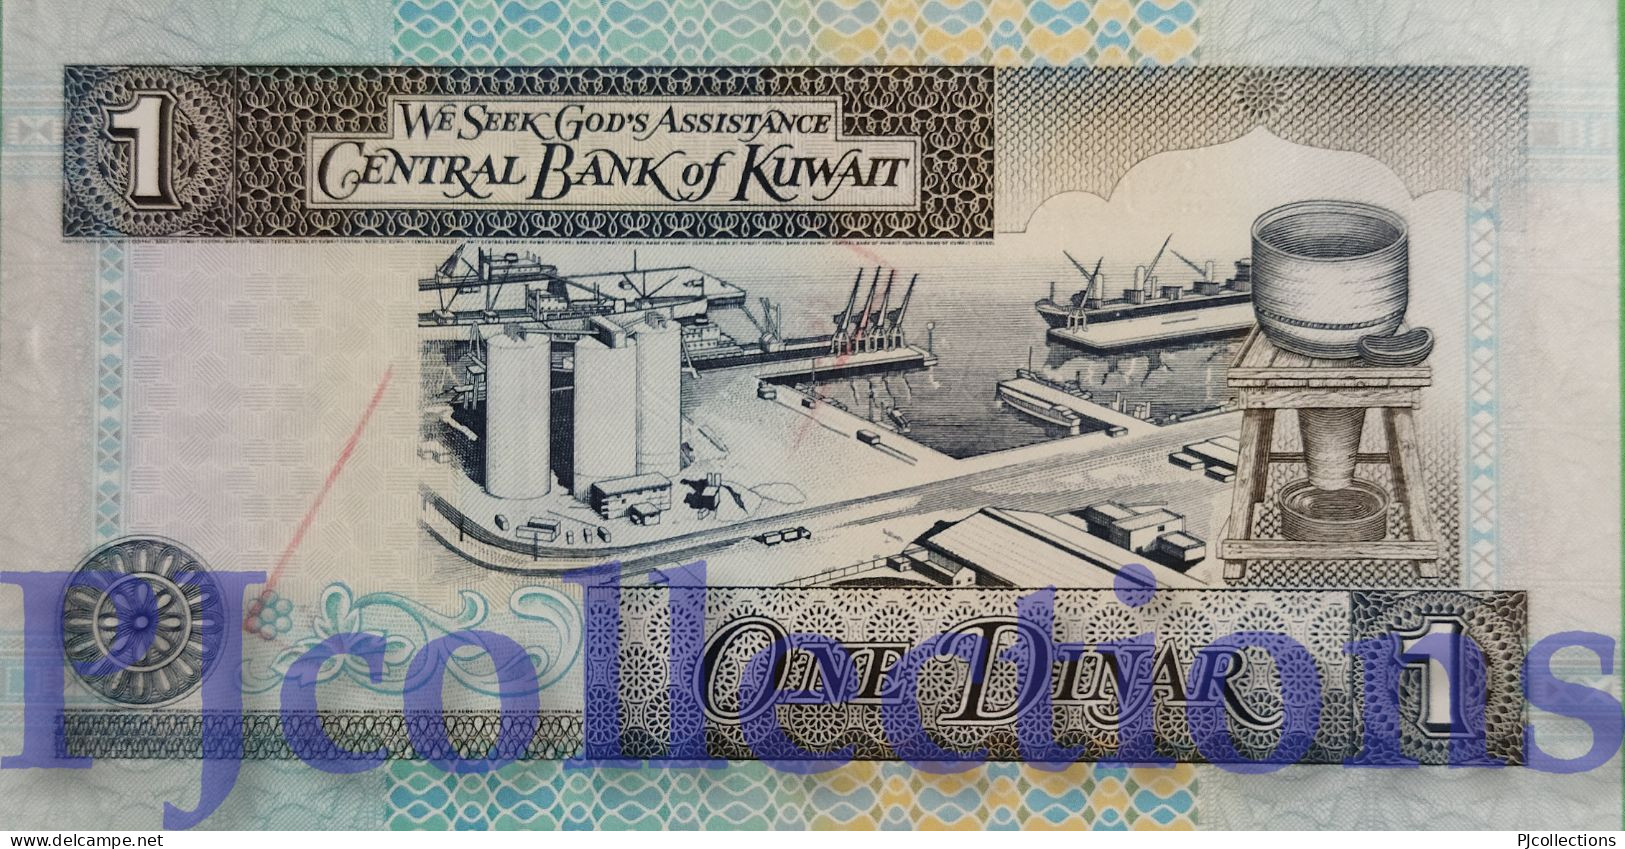 KUWAIT 1 DINAR 1994 PICK 25f UNC GOOD SERIAL NUMBER "080800" - Koweït